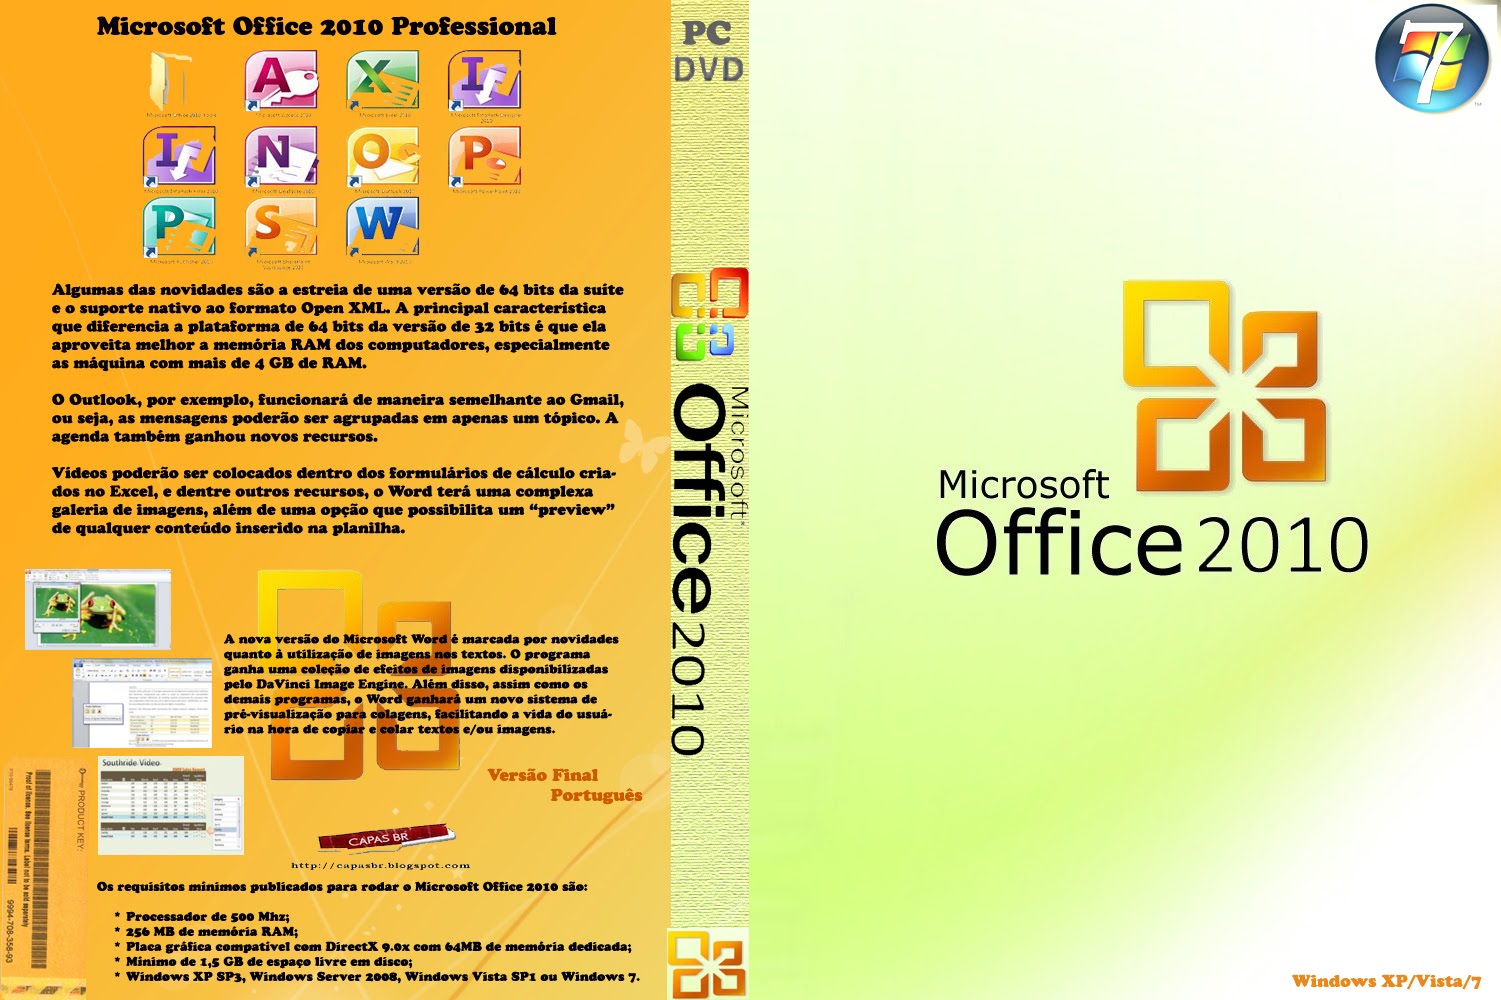 microsoft office professional 2010 disc